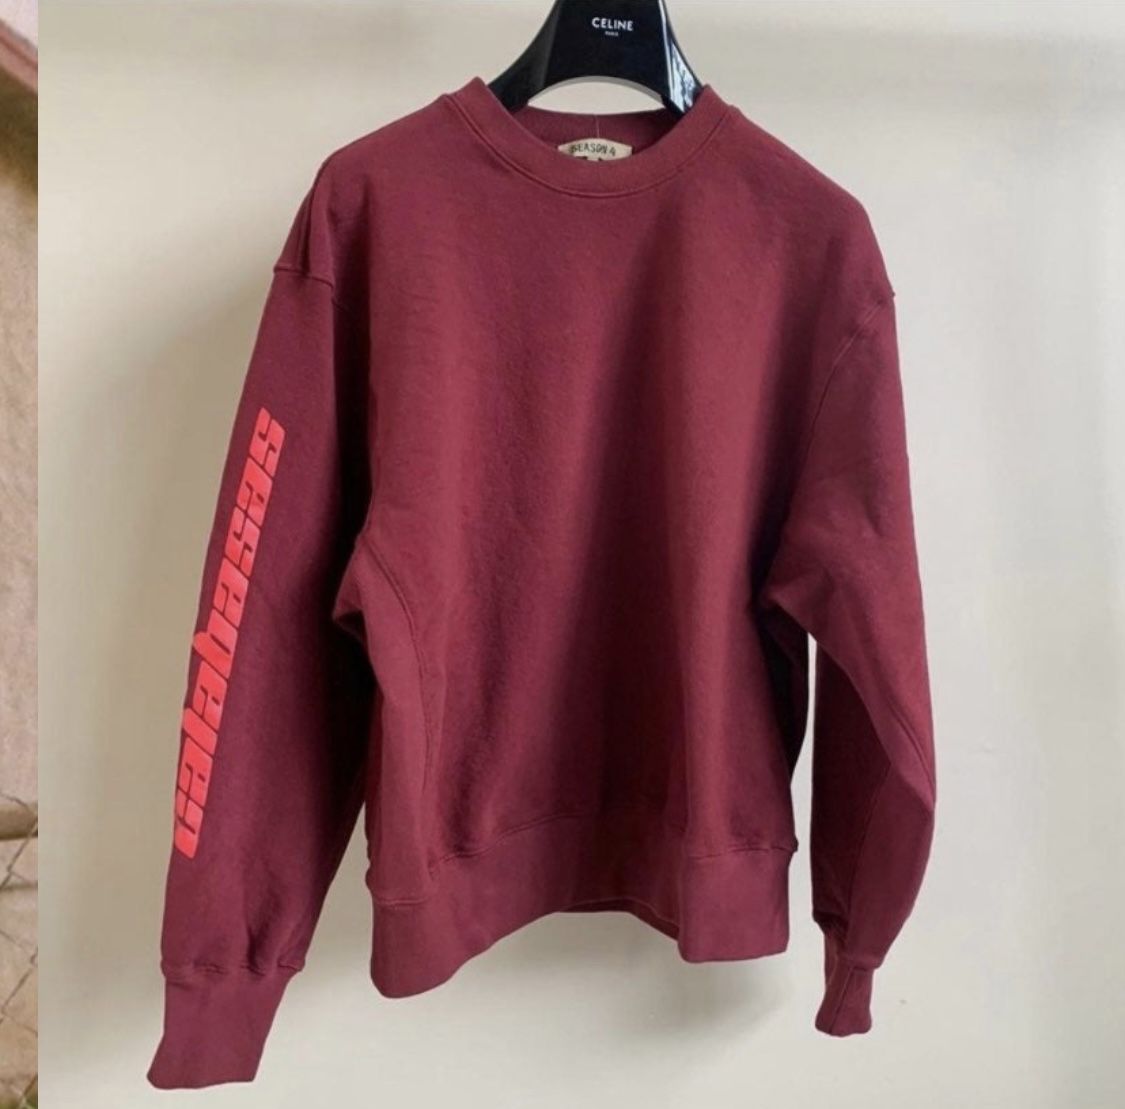 yeezy calabasas red Sweatshirt long sleeve crewneck sweater adidas by kanye west